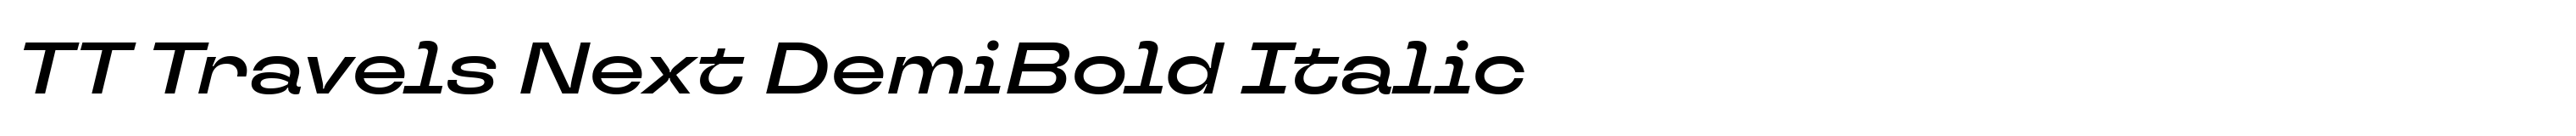 TT Travels Next DemiBold Italic